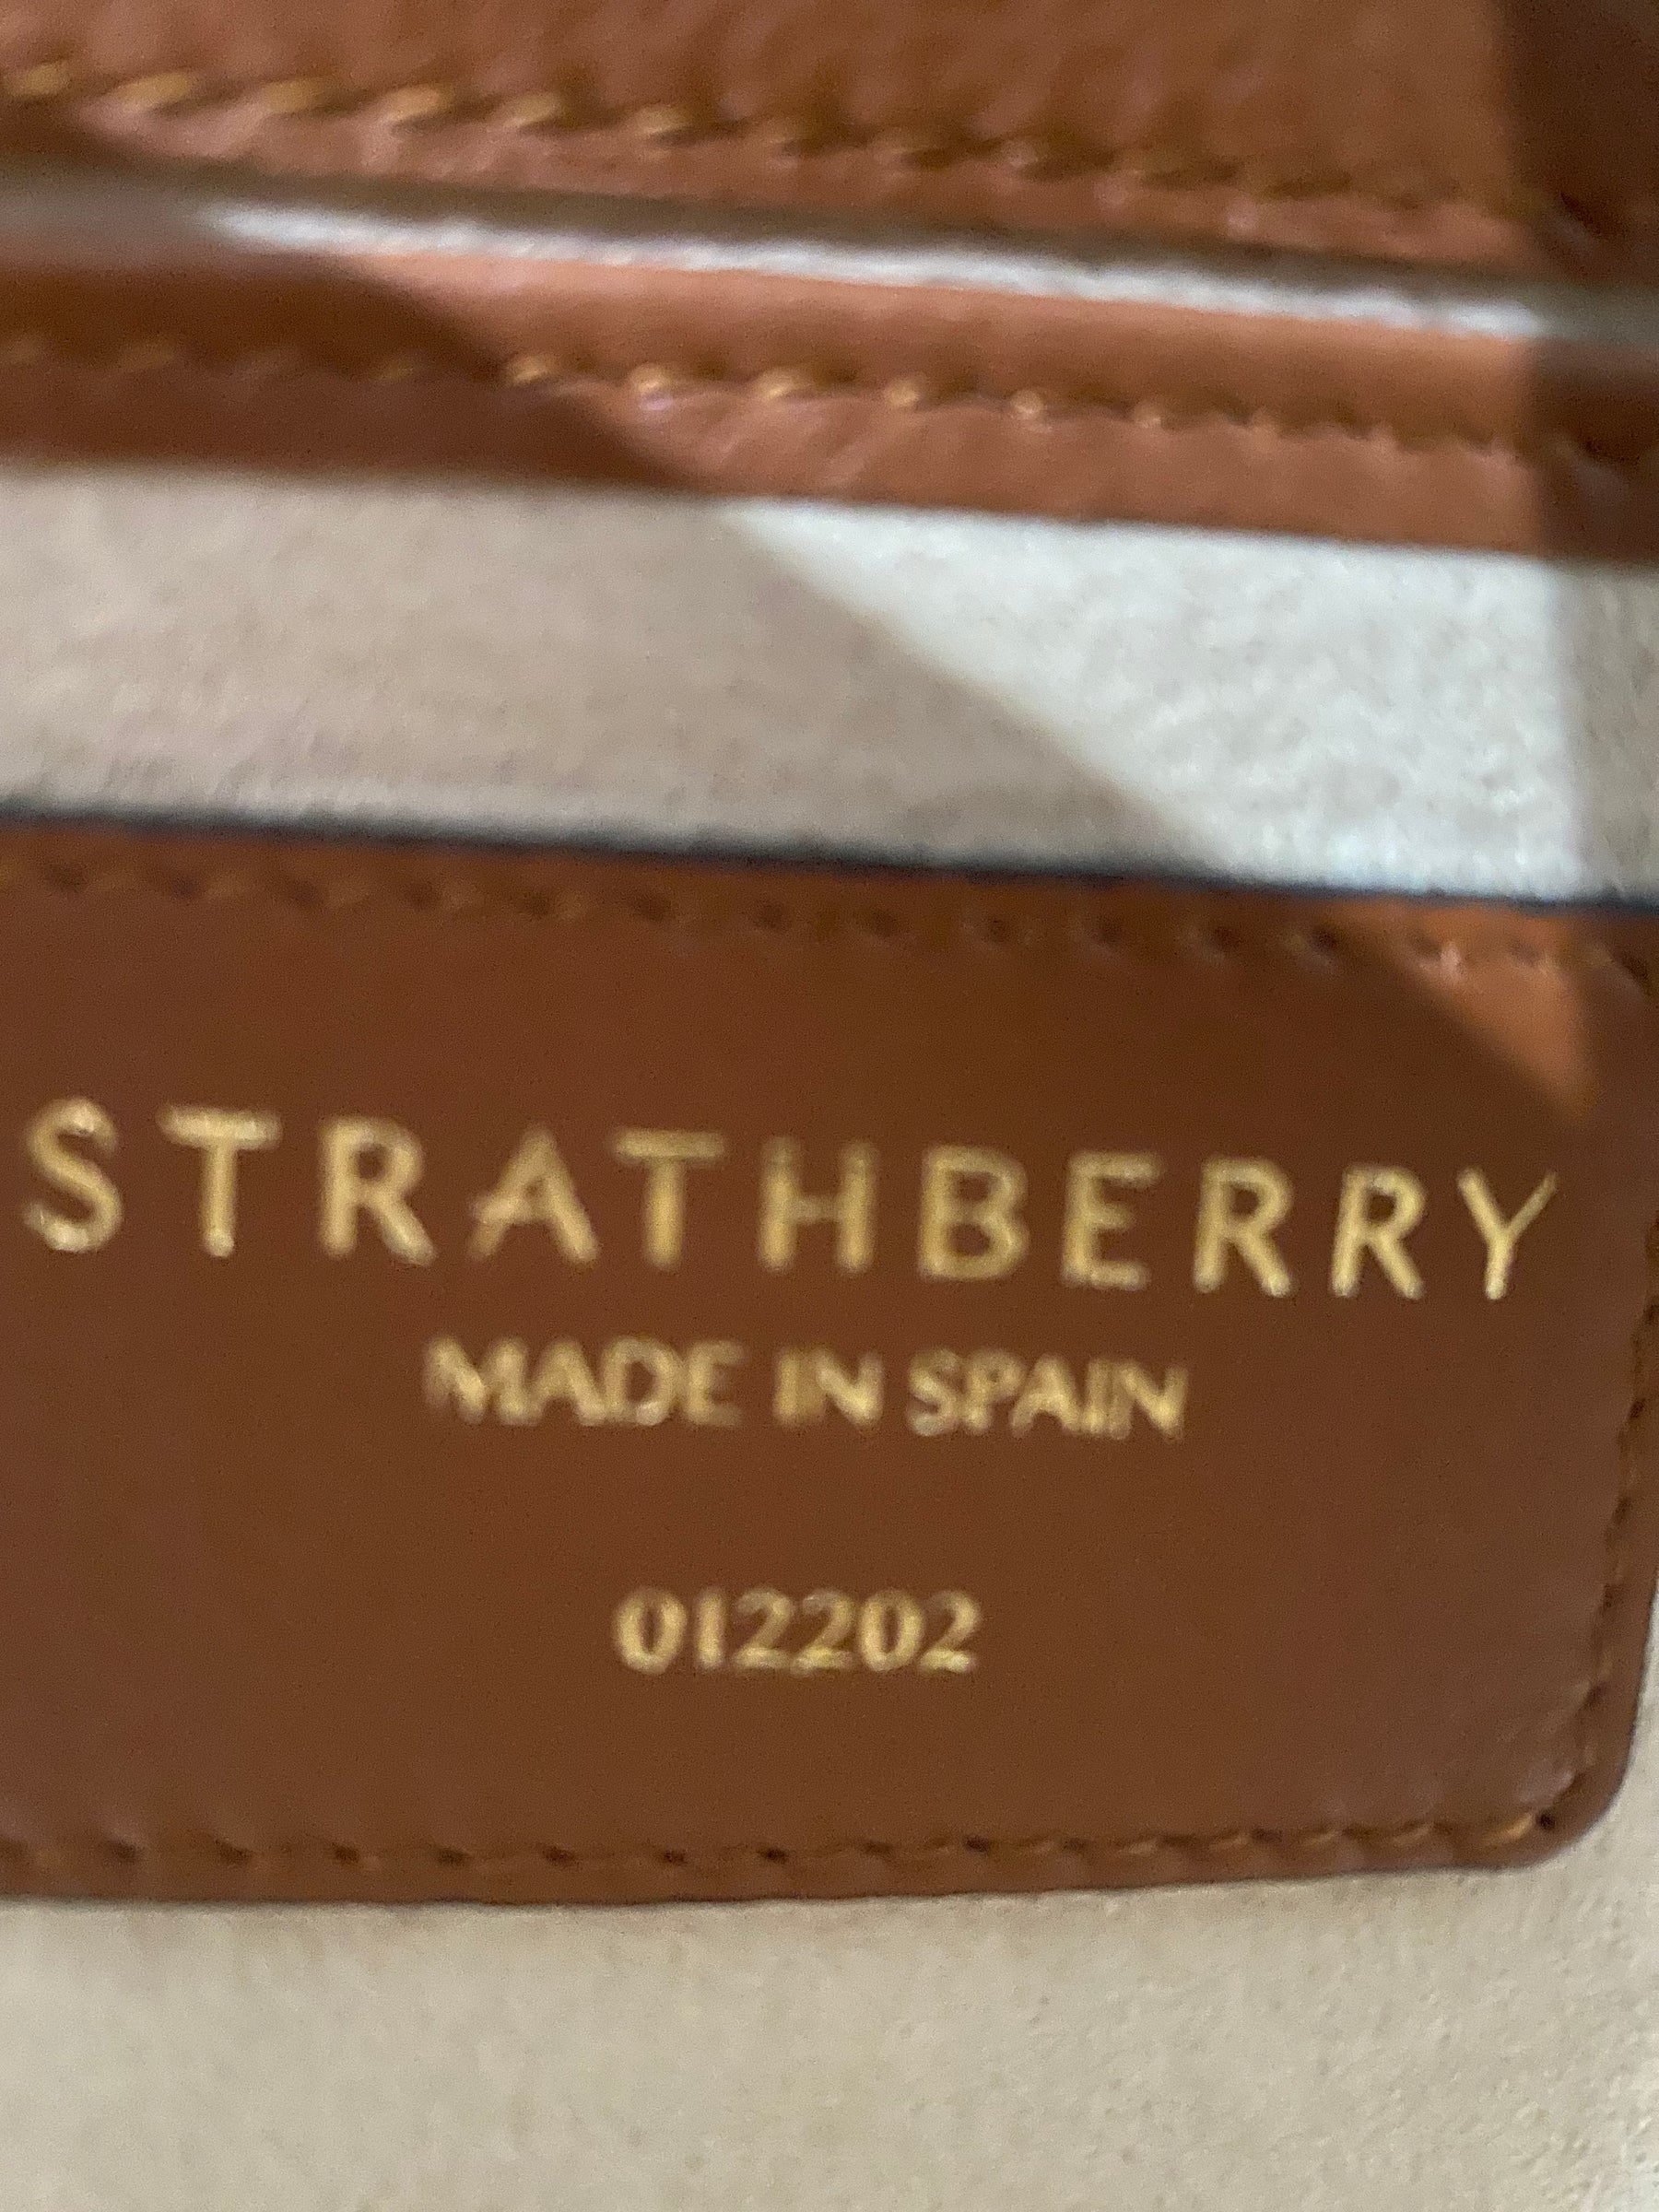 Strathberry Mini Crescent Crochet Trim Leather Shoulder Bag